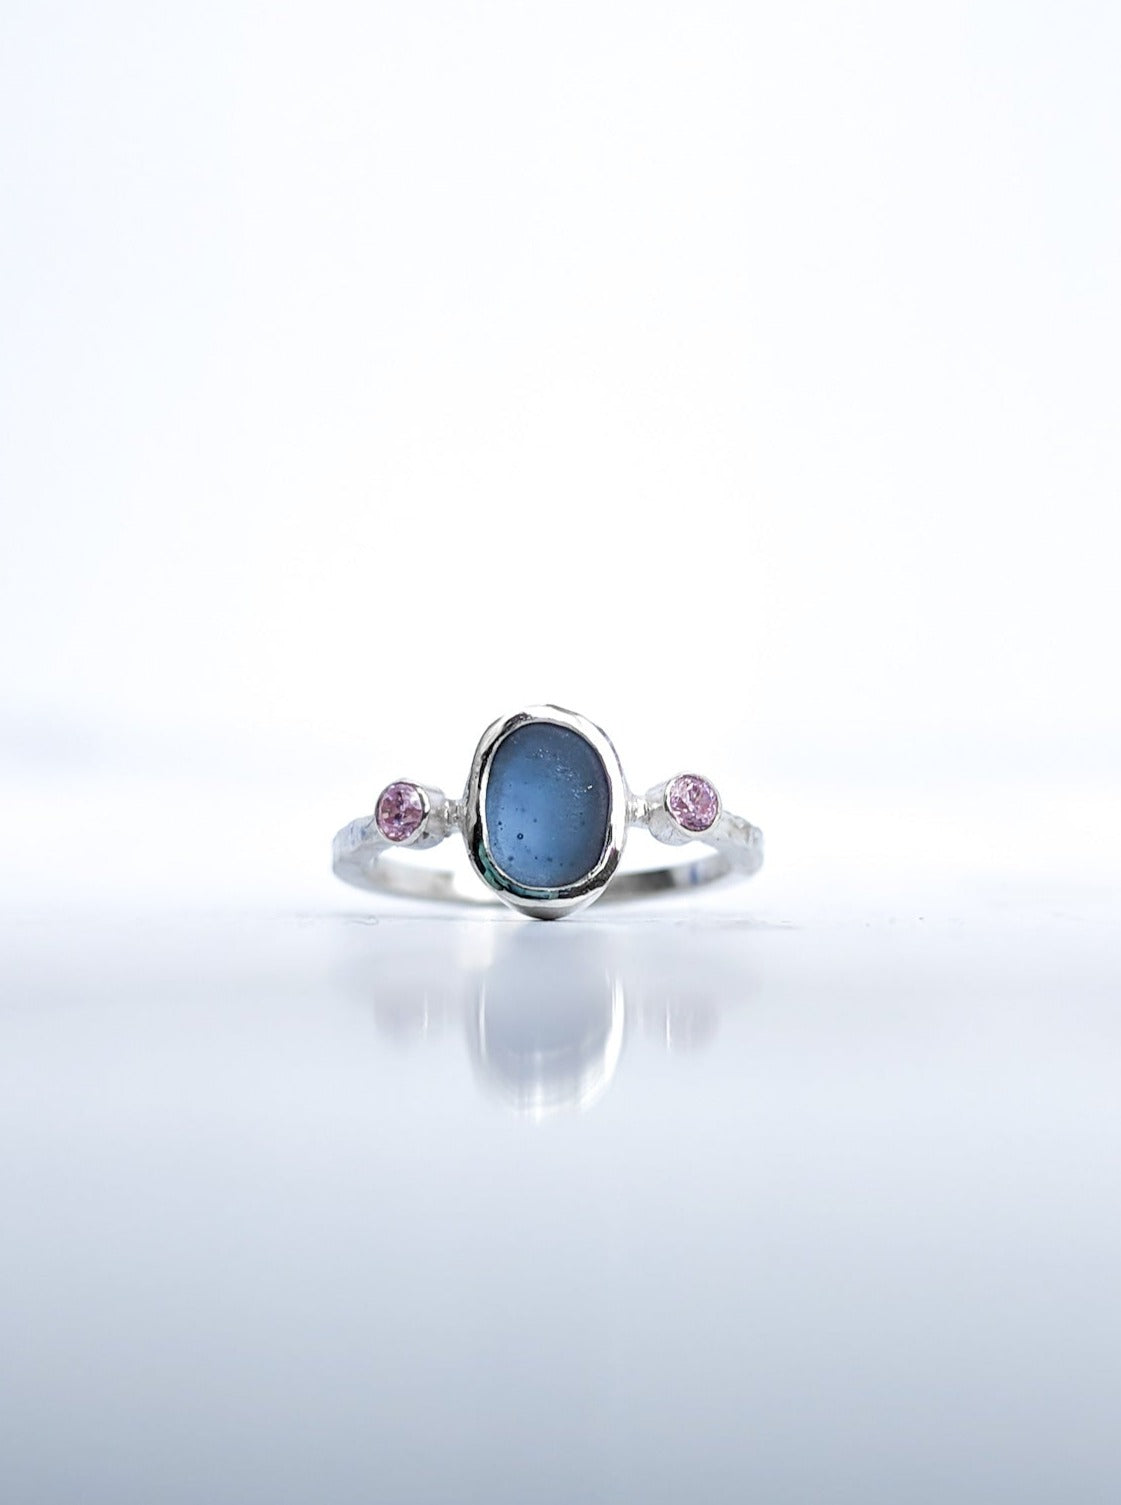 Cornflour blue sea glass engagement ring